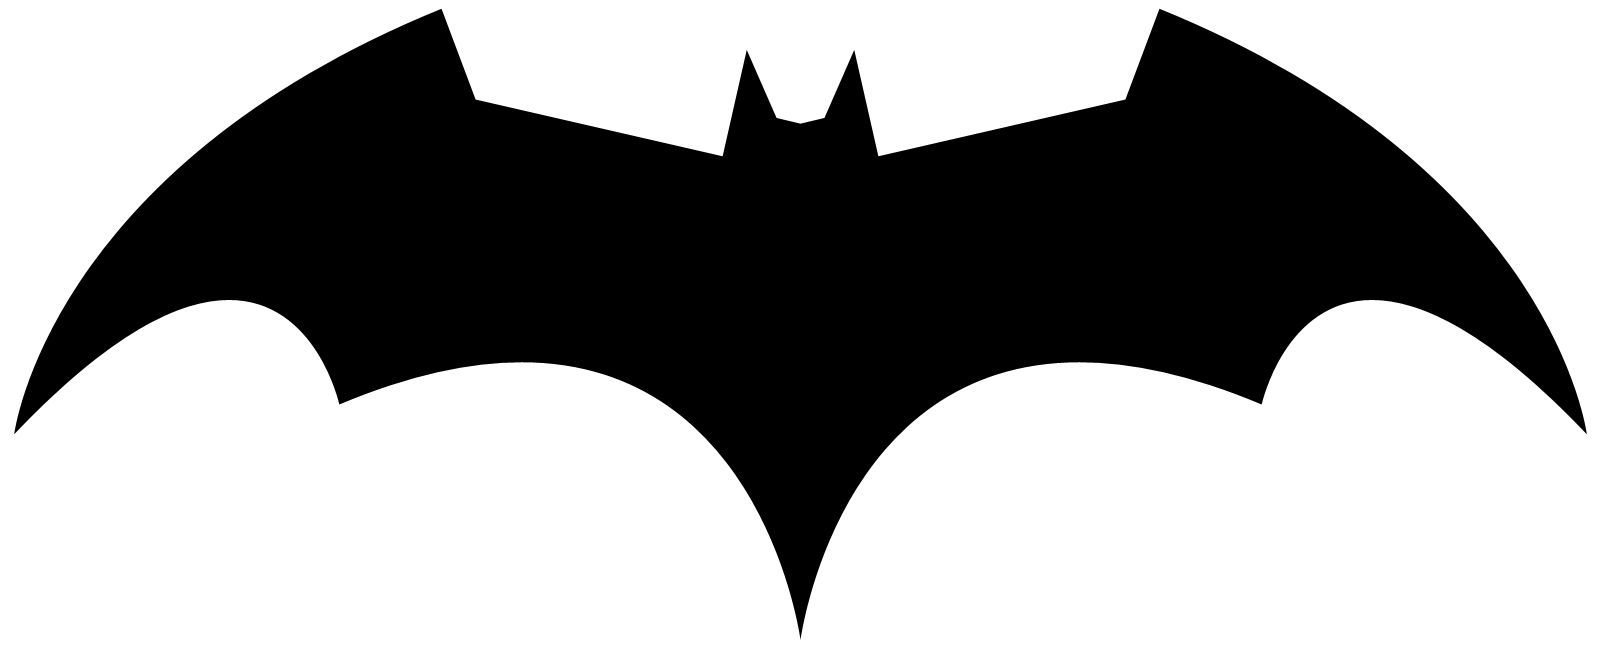 Bat Man Logo - Image - Batman Logo.png | Community Central | FANDOM powered by Wikia